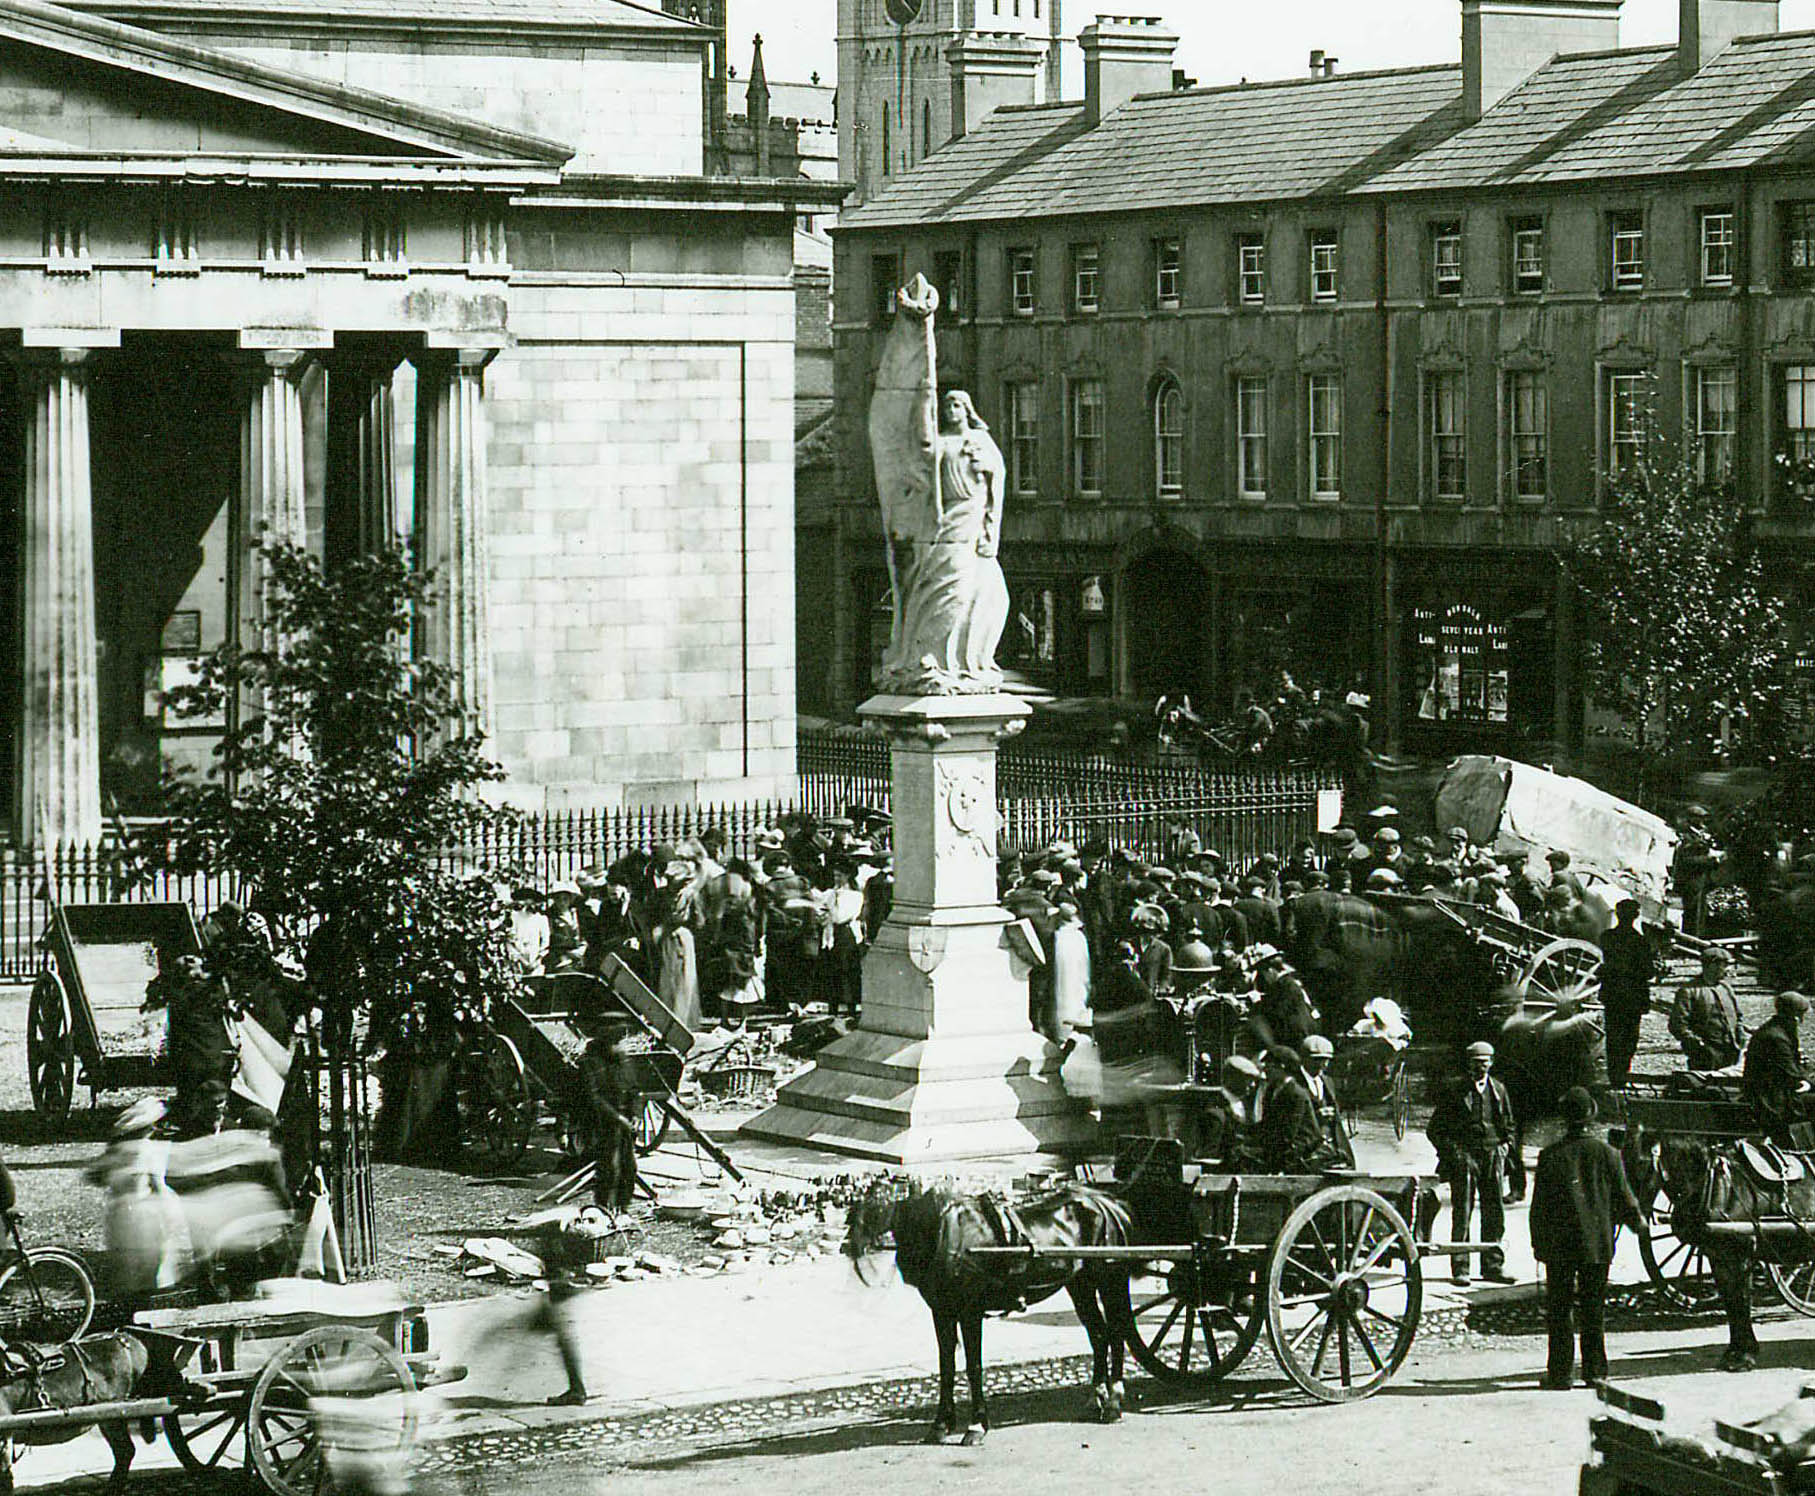 Dundalk's Memorial to the United Irishmen